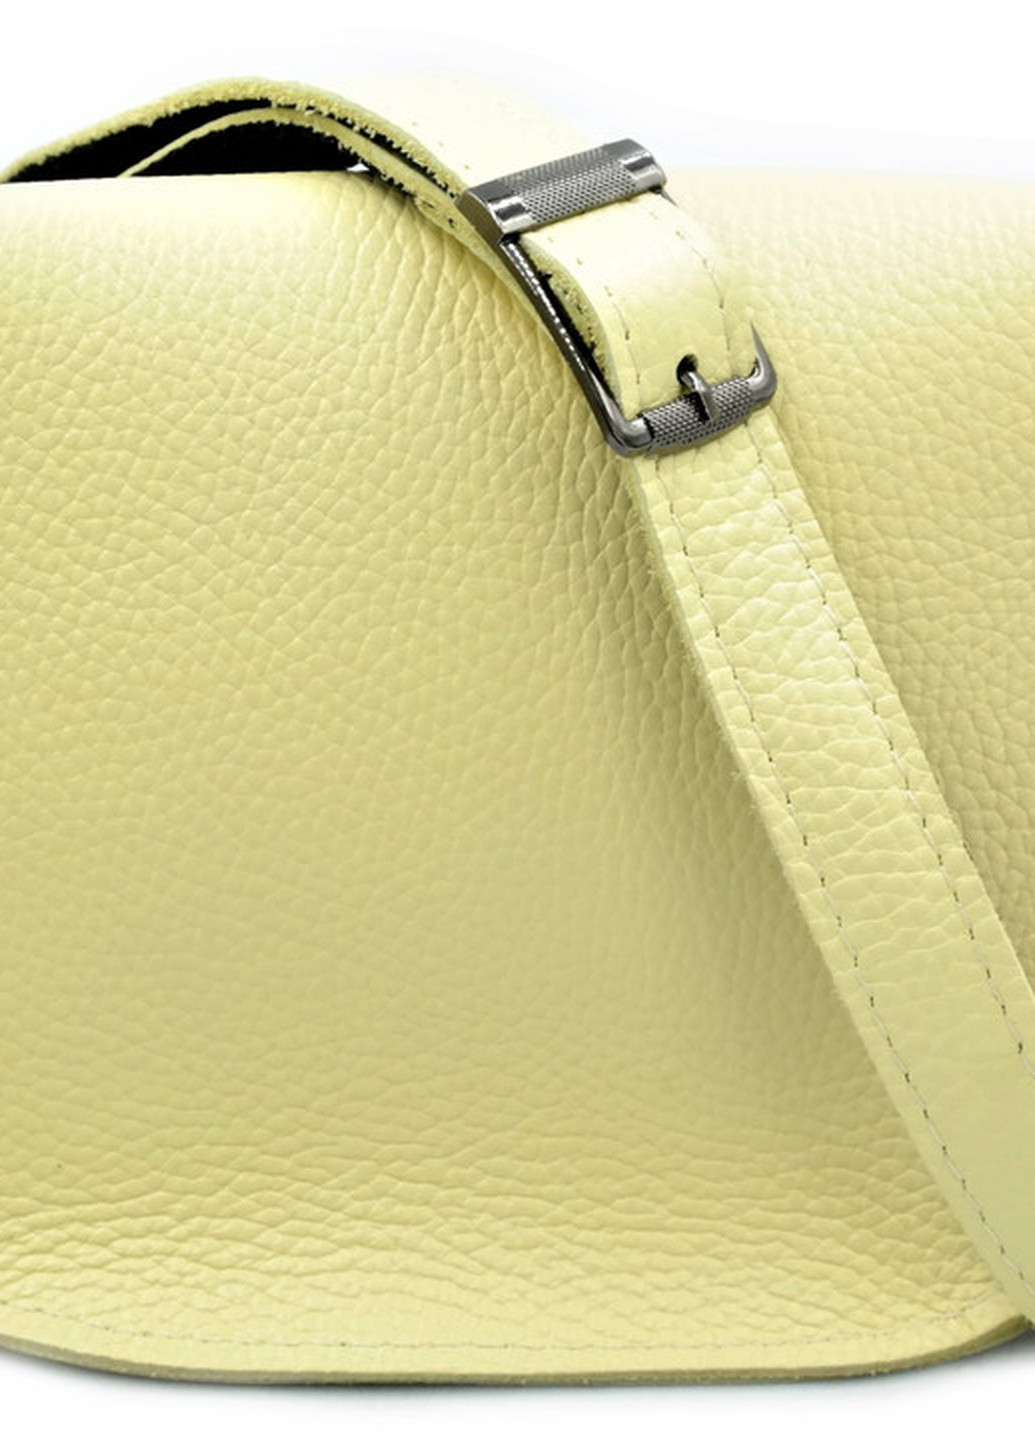 Женская кожаная сумка на пояс бананка цвет жёлтый SKL85-295516 New Trend (259161375)